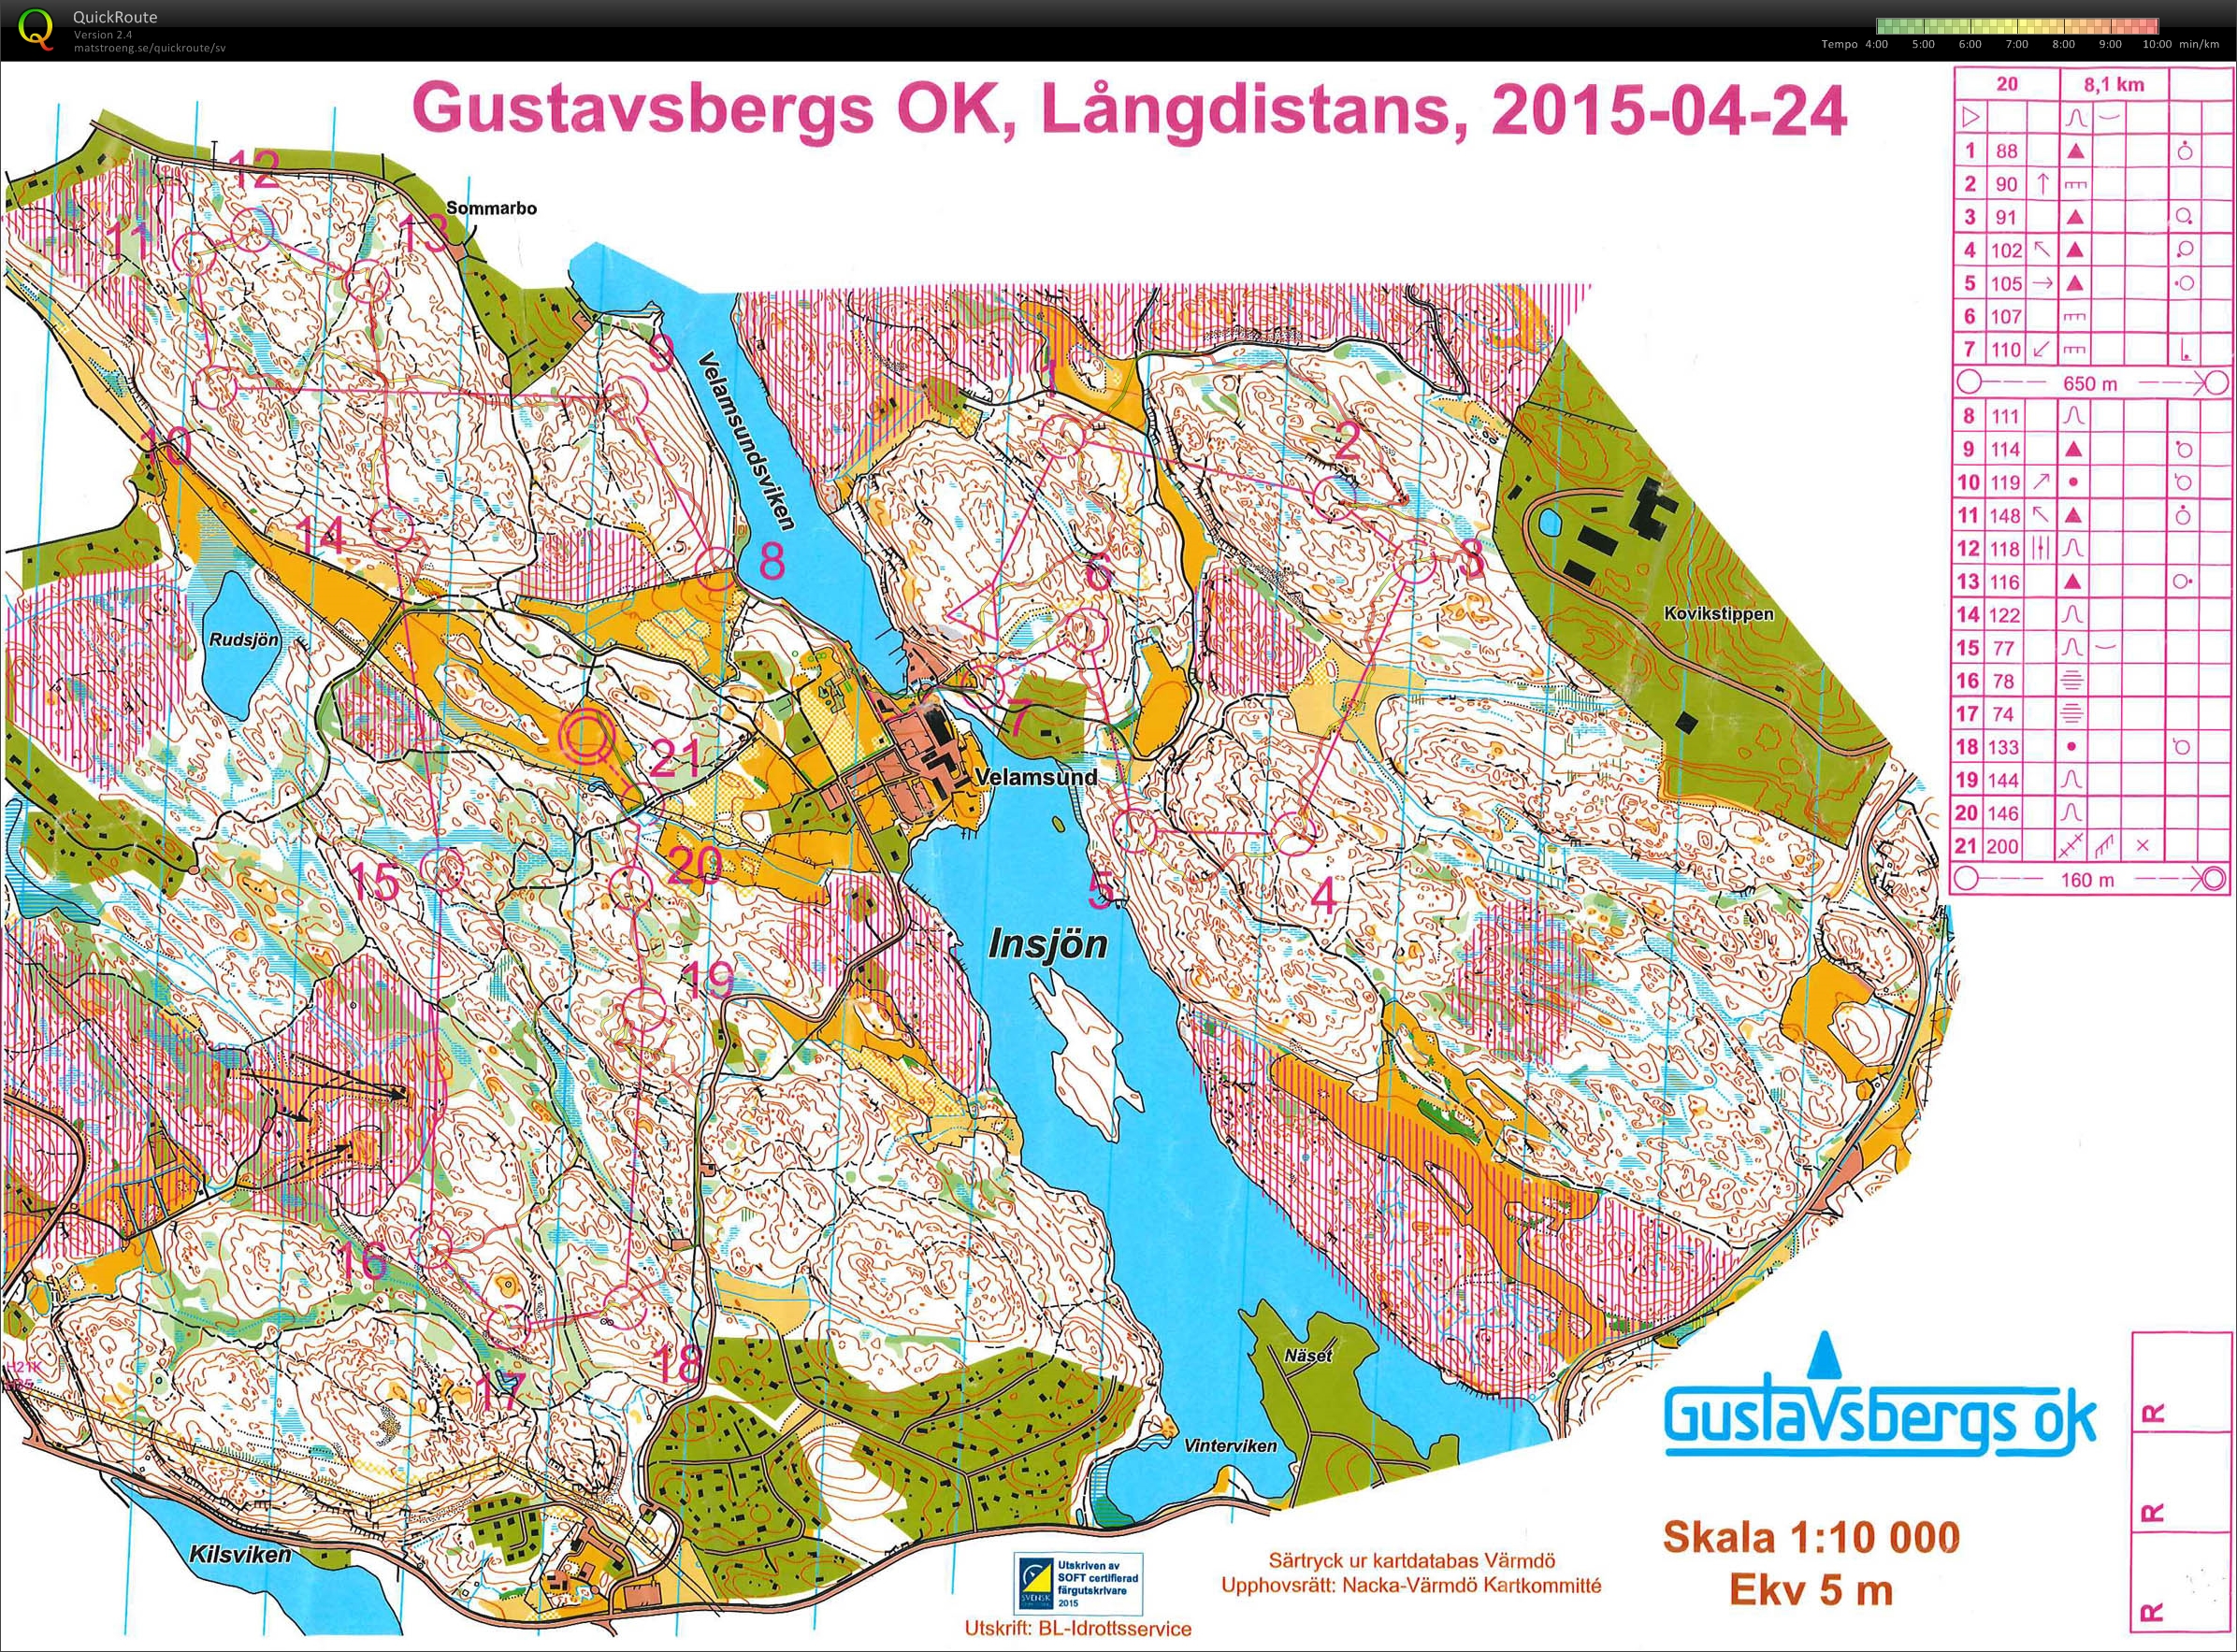 Gustavsbergs OK långdistans (25-04-2015)